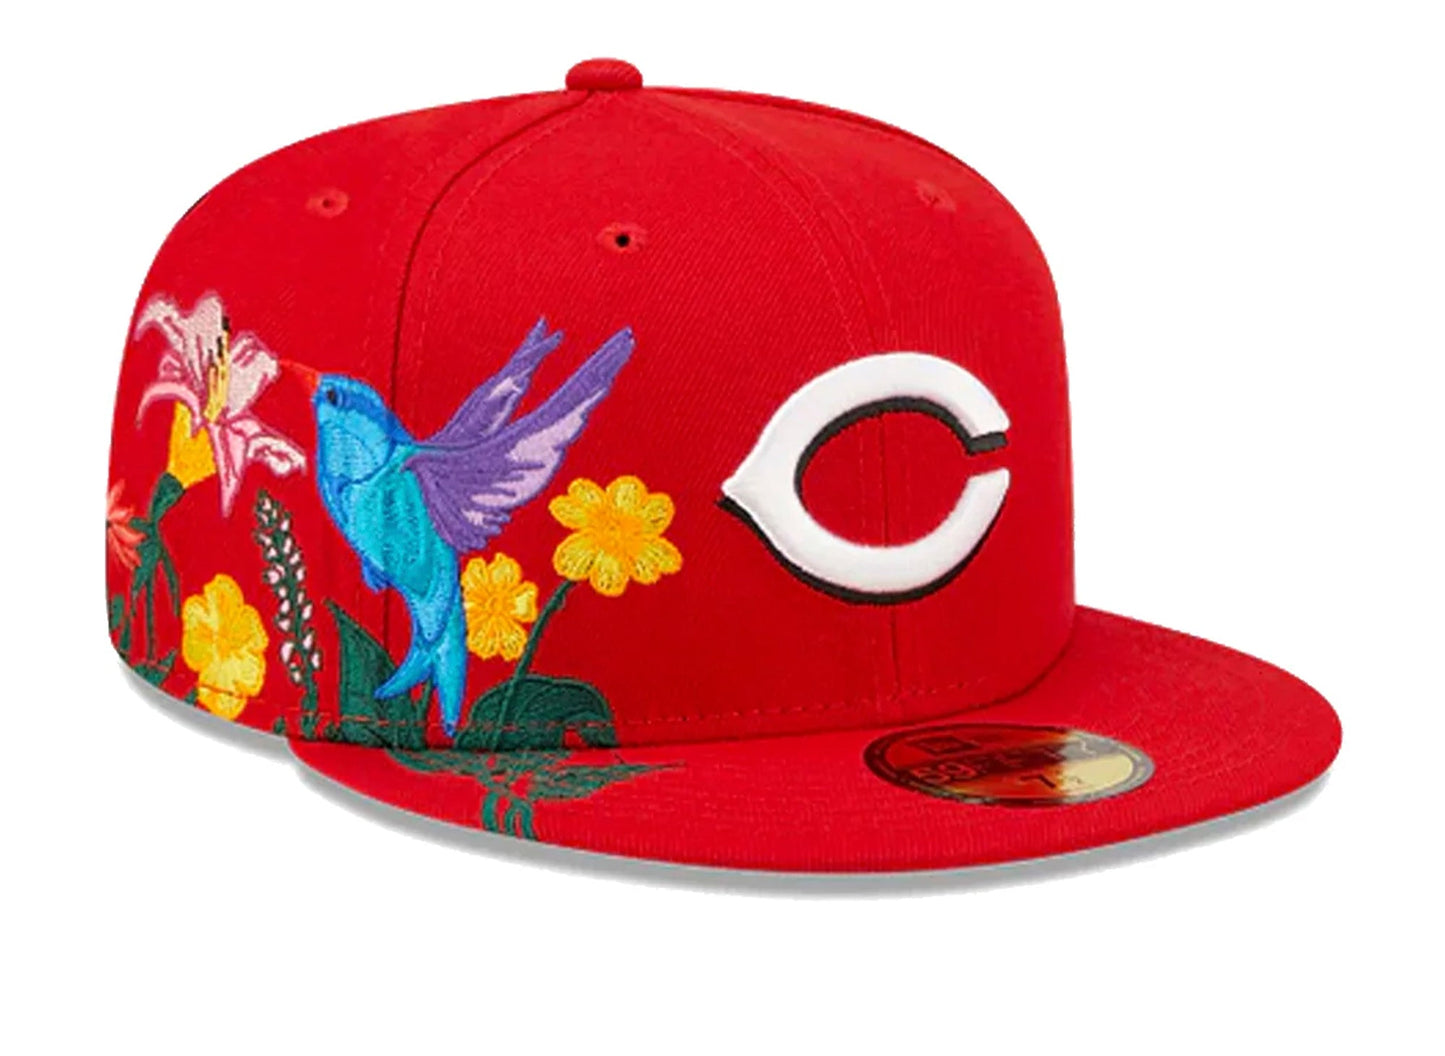 New Era Blooming Cincinnati Reds Hat